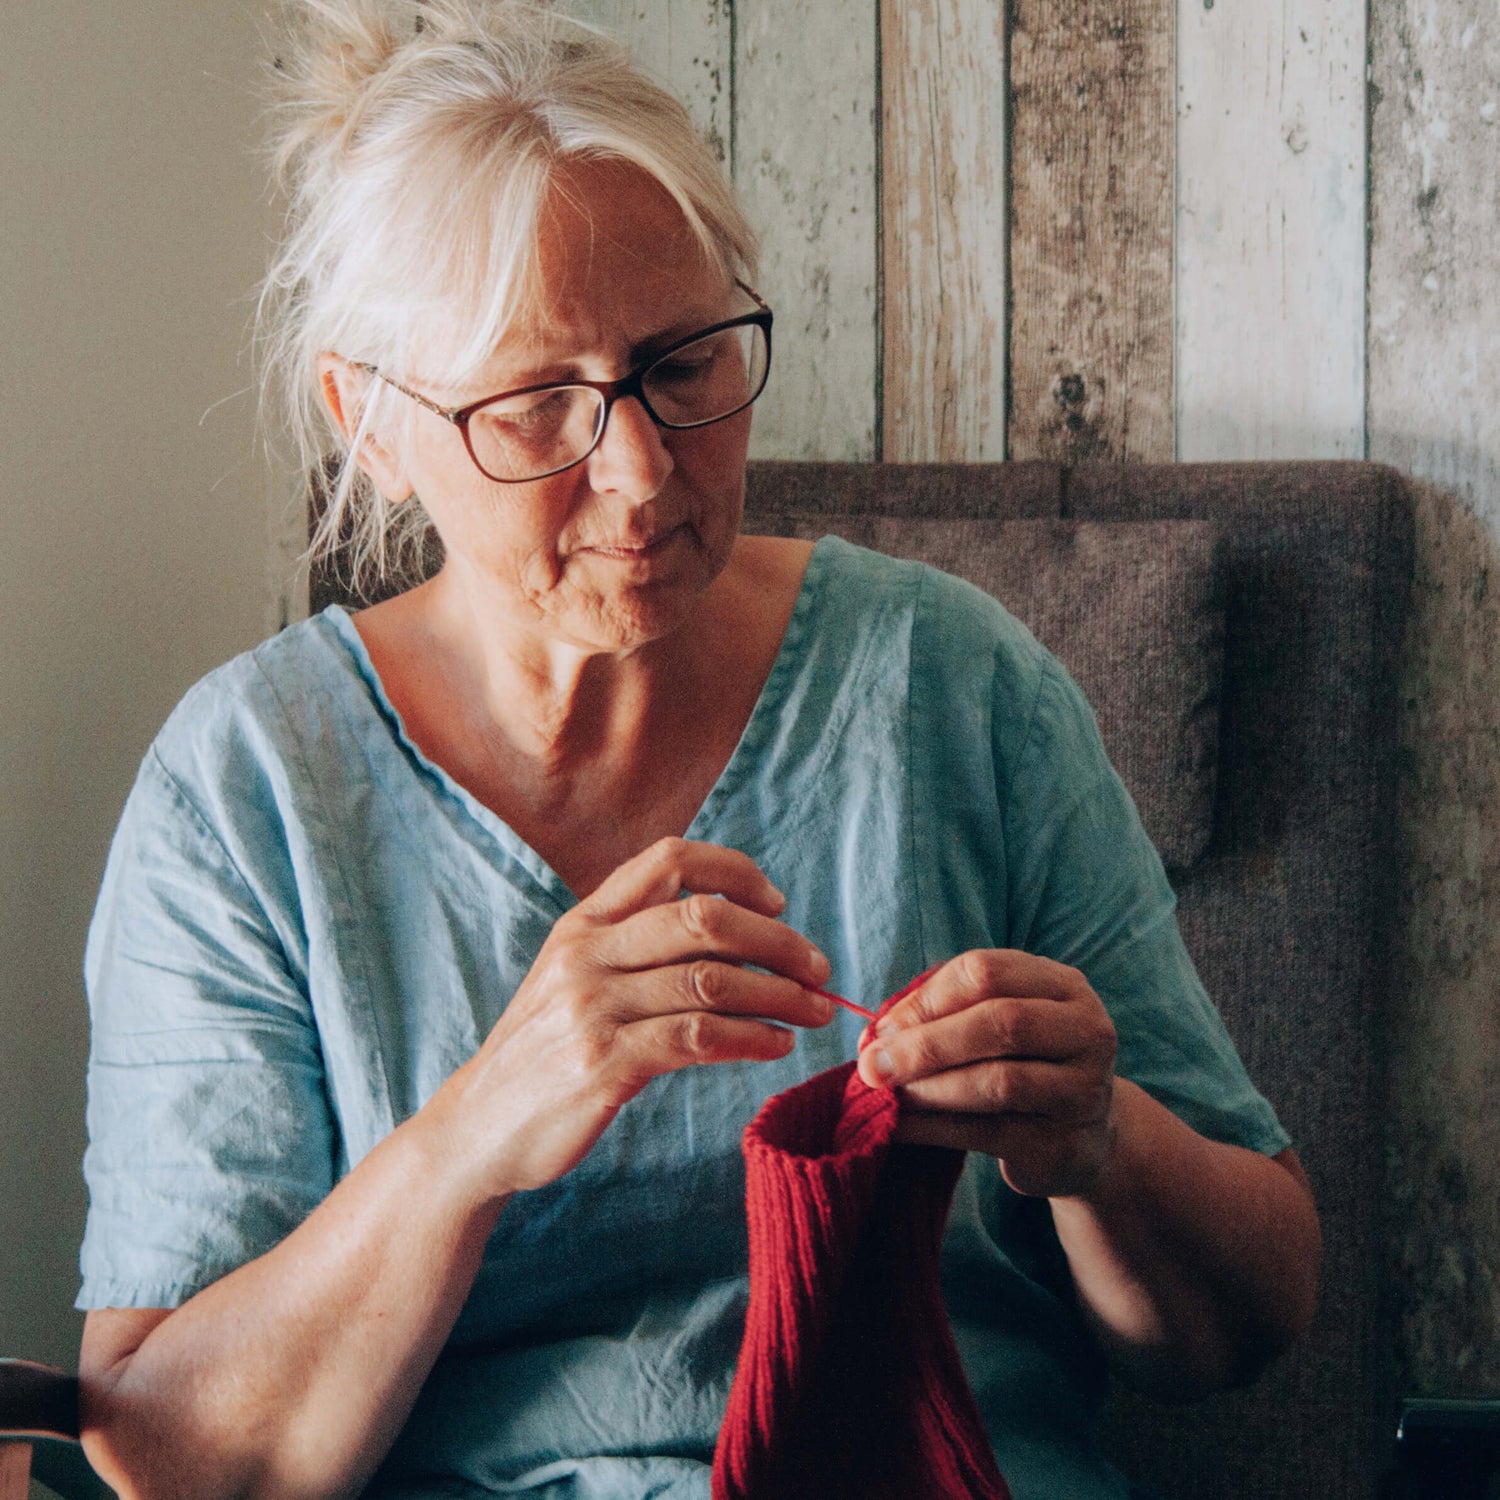 Woman knitting red wool beanie